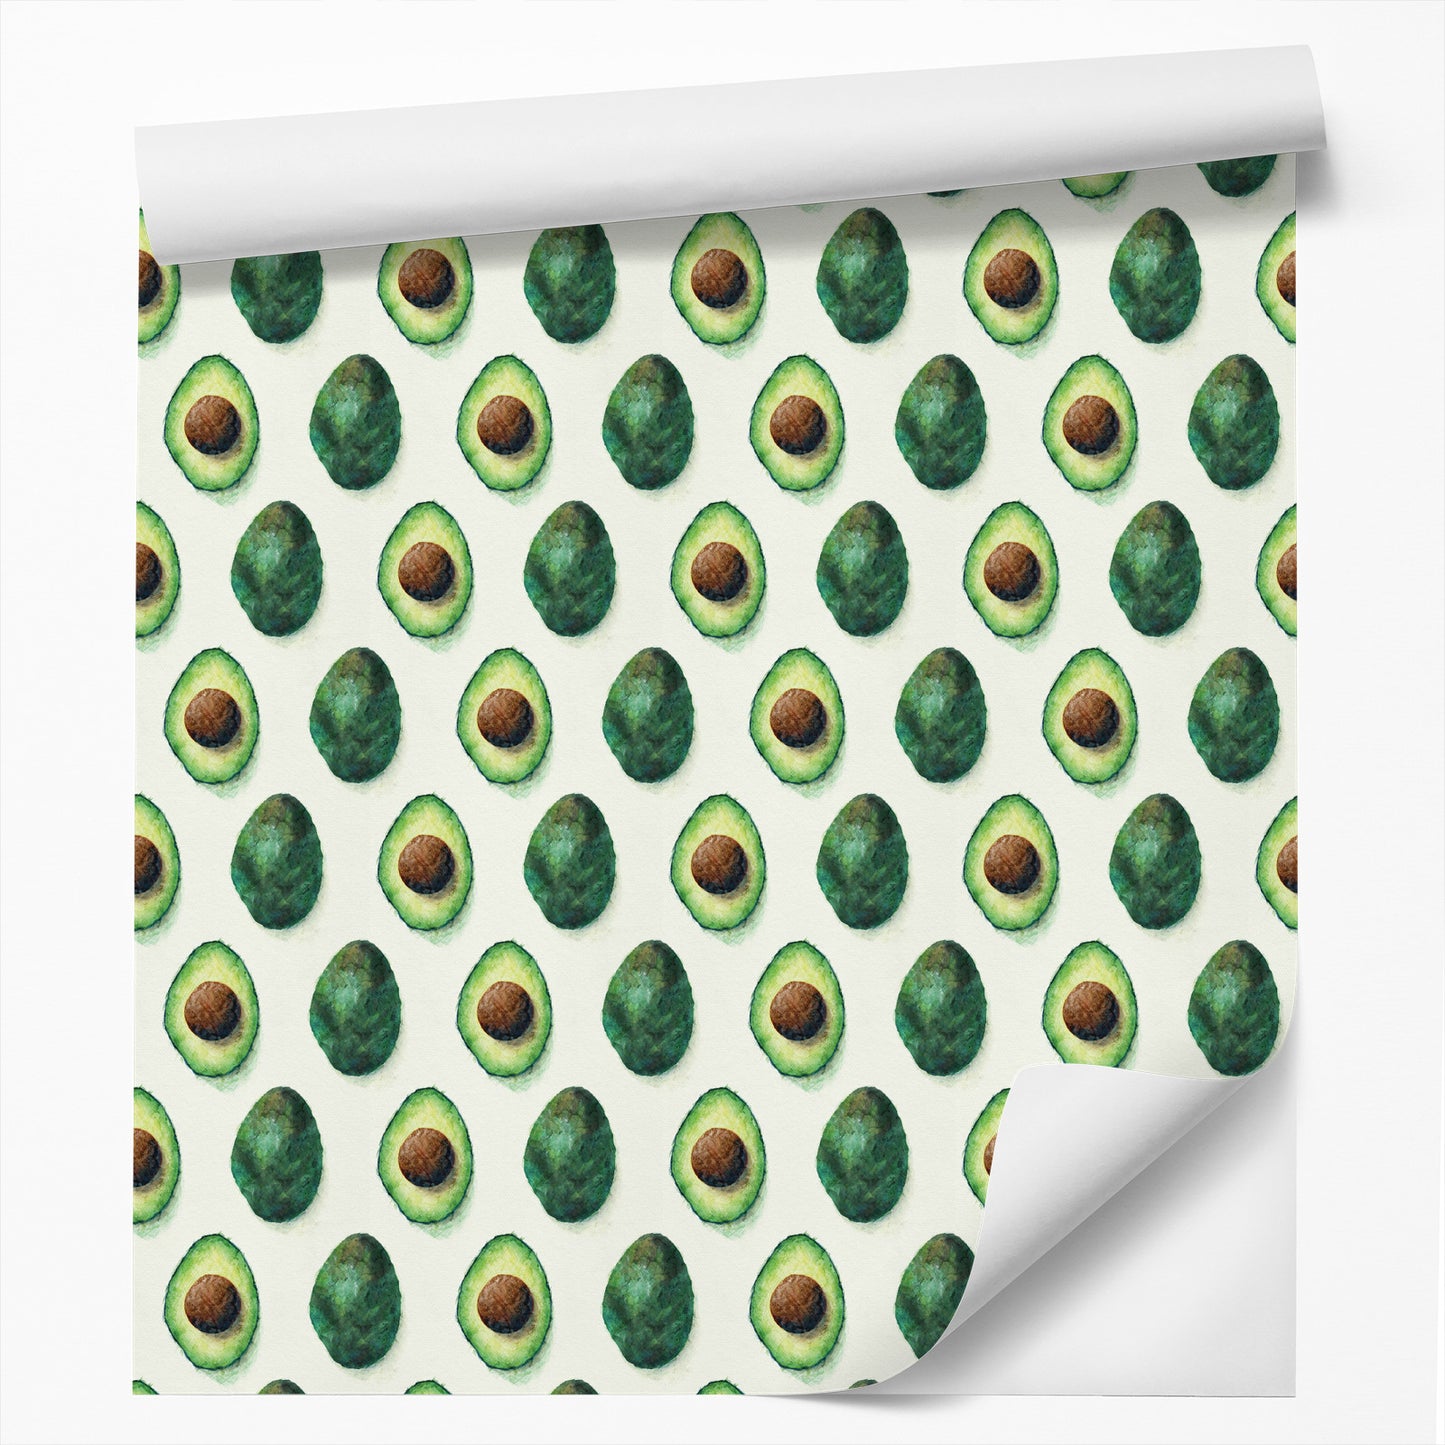 Peel & Stick Wallpaper Roll - Avocado Pattern by Tracie &rews